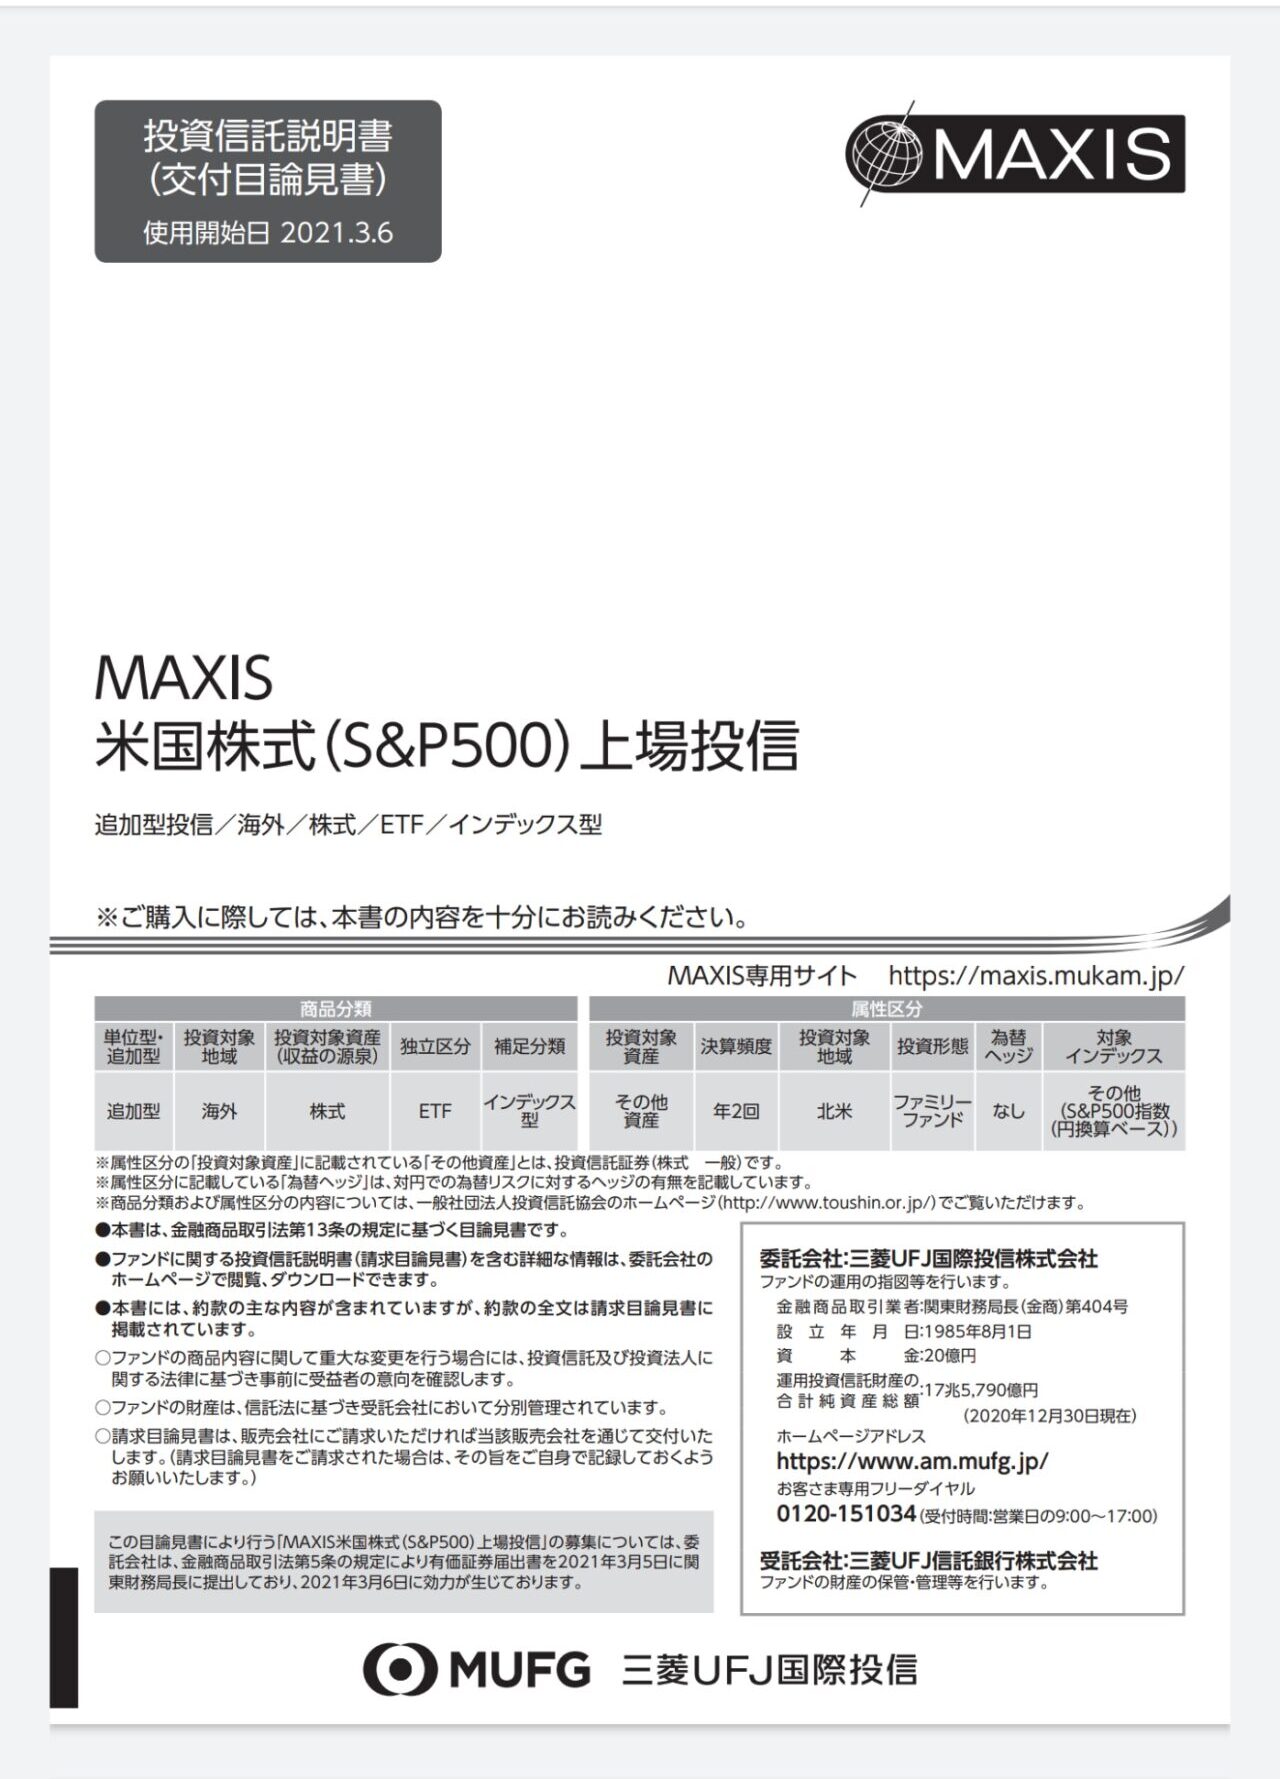 MAXIS米国株式表紙